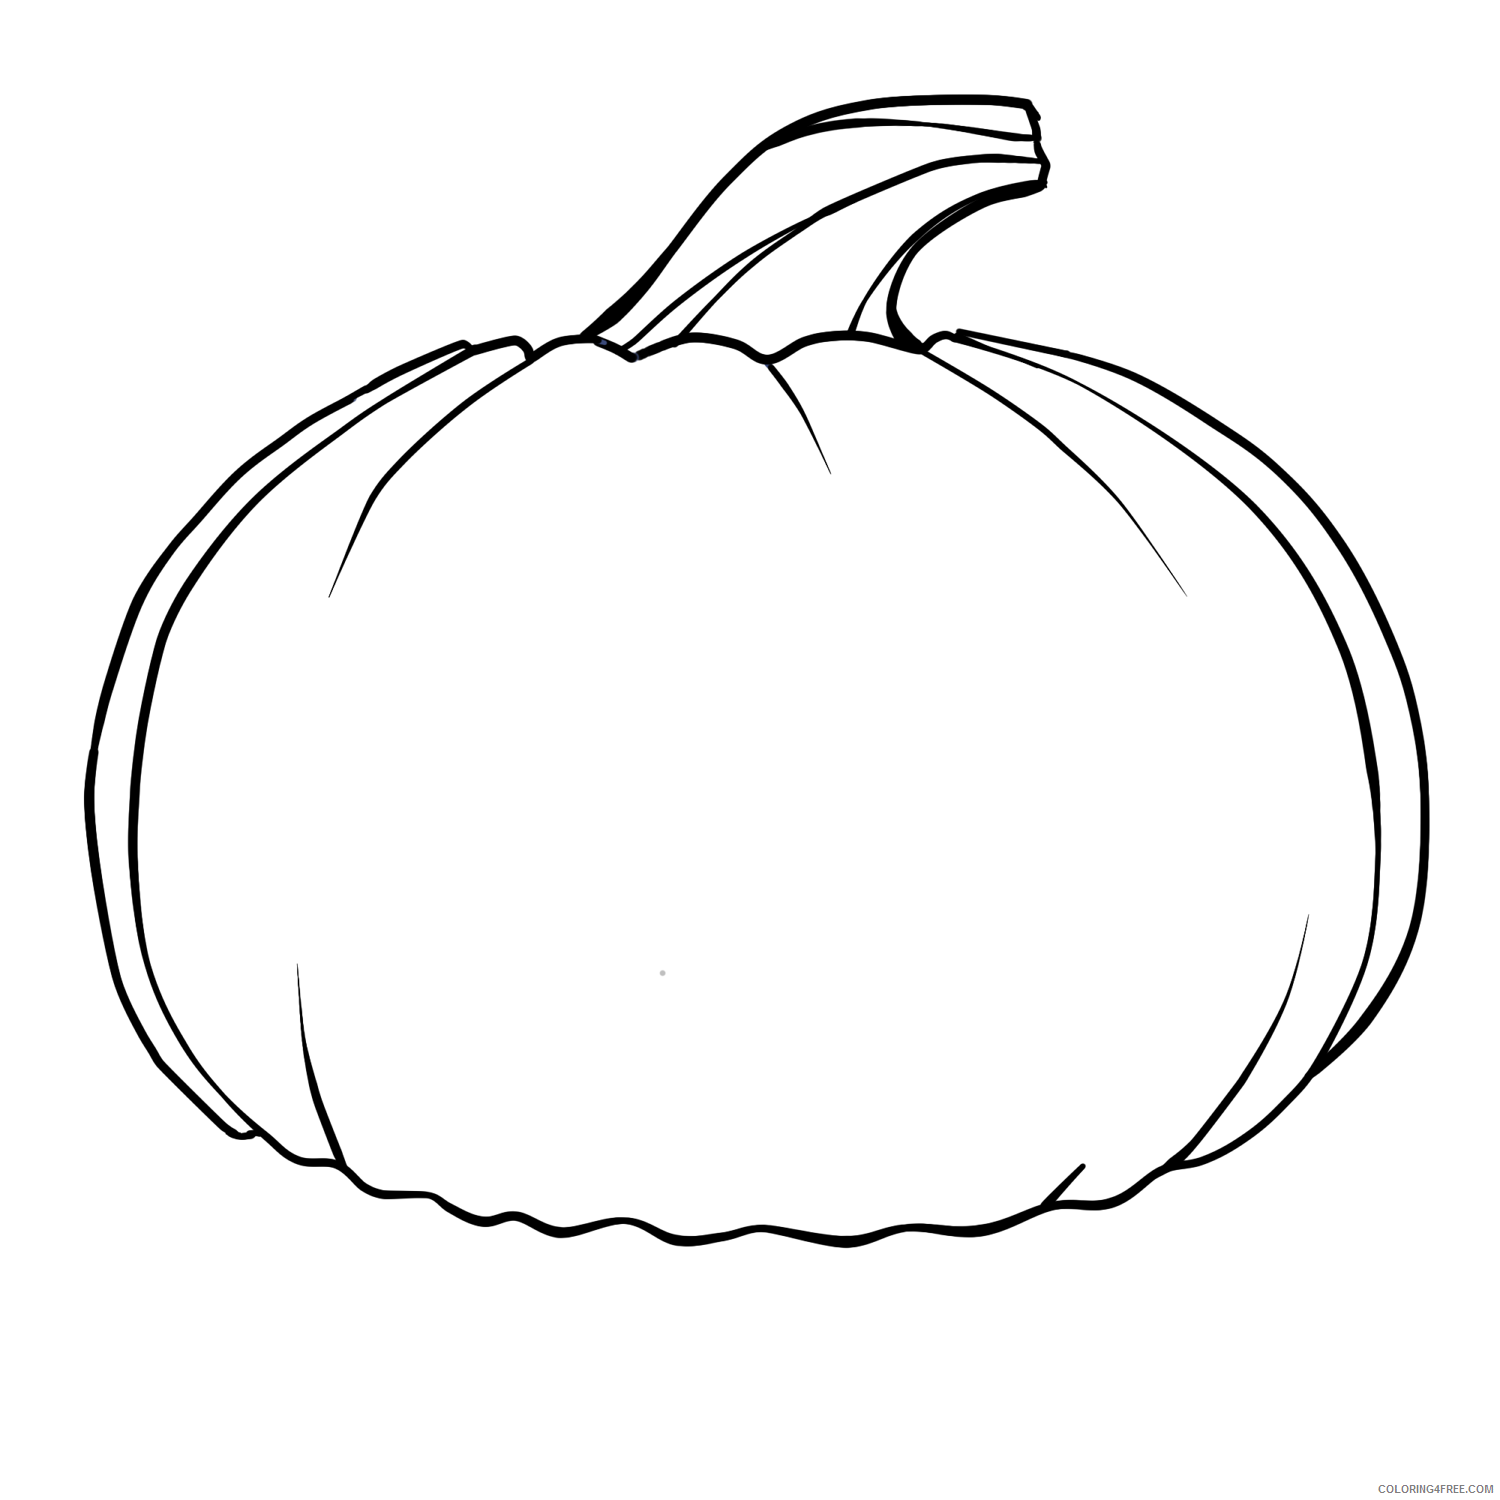 Pumpkin Coloring Pages Vegetables Food Pumpkins To Printable 2021 729 Coloring4free